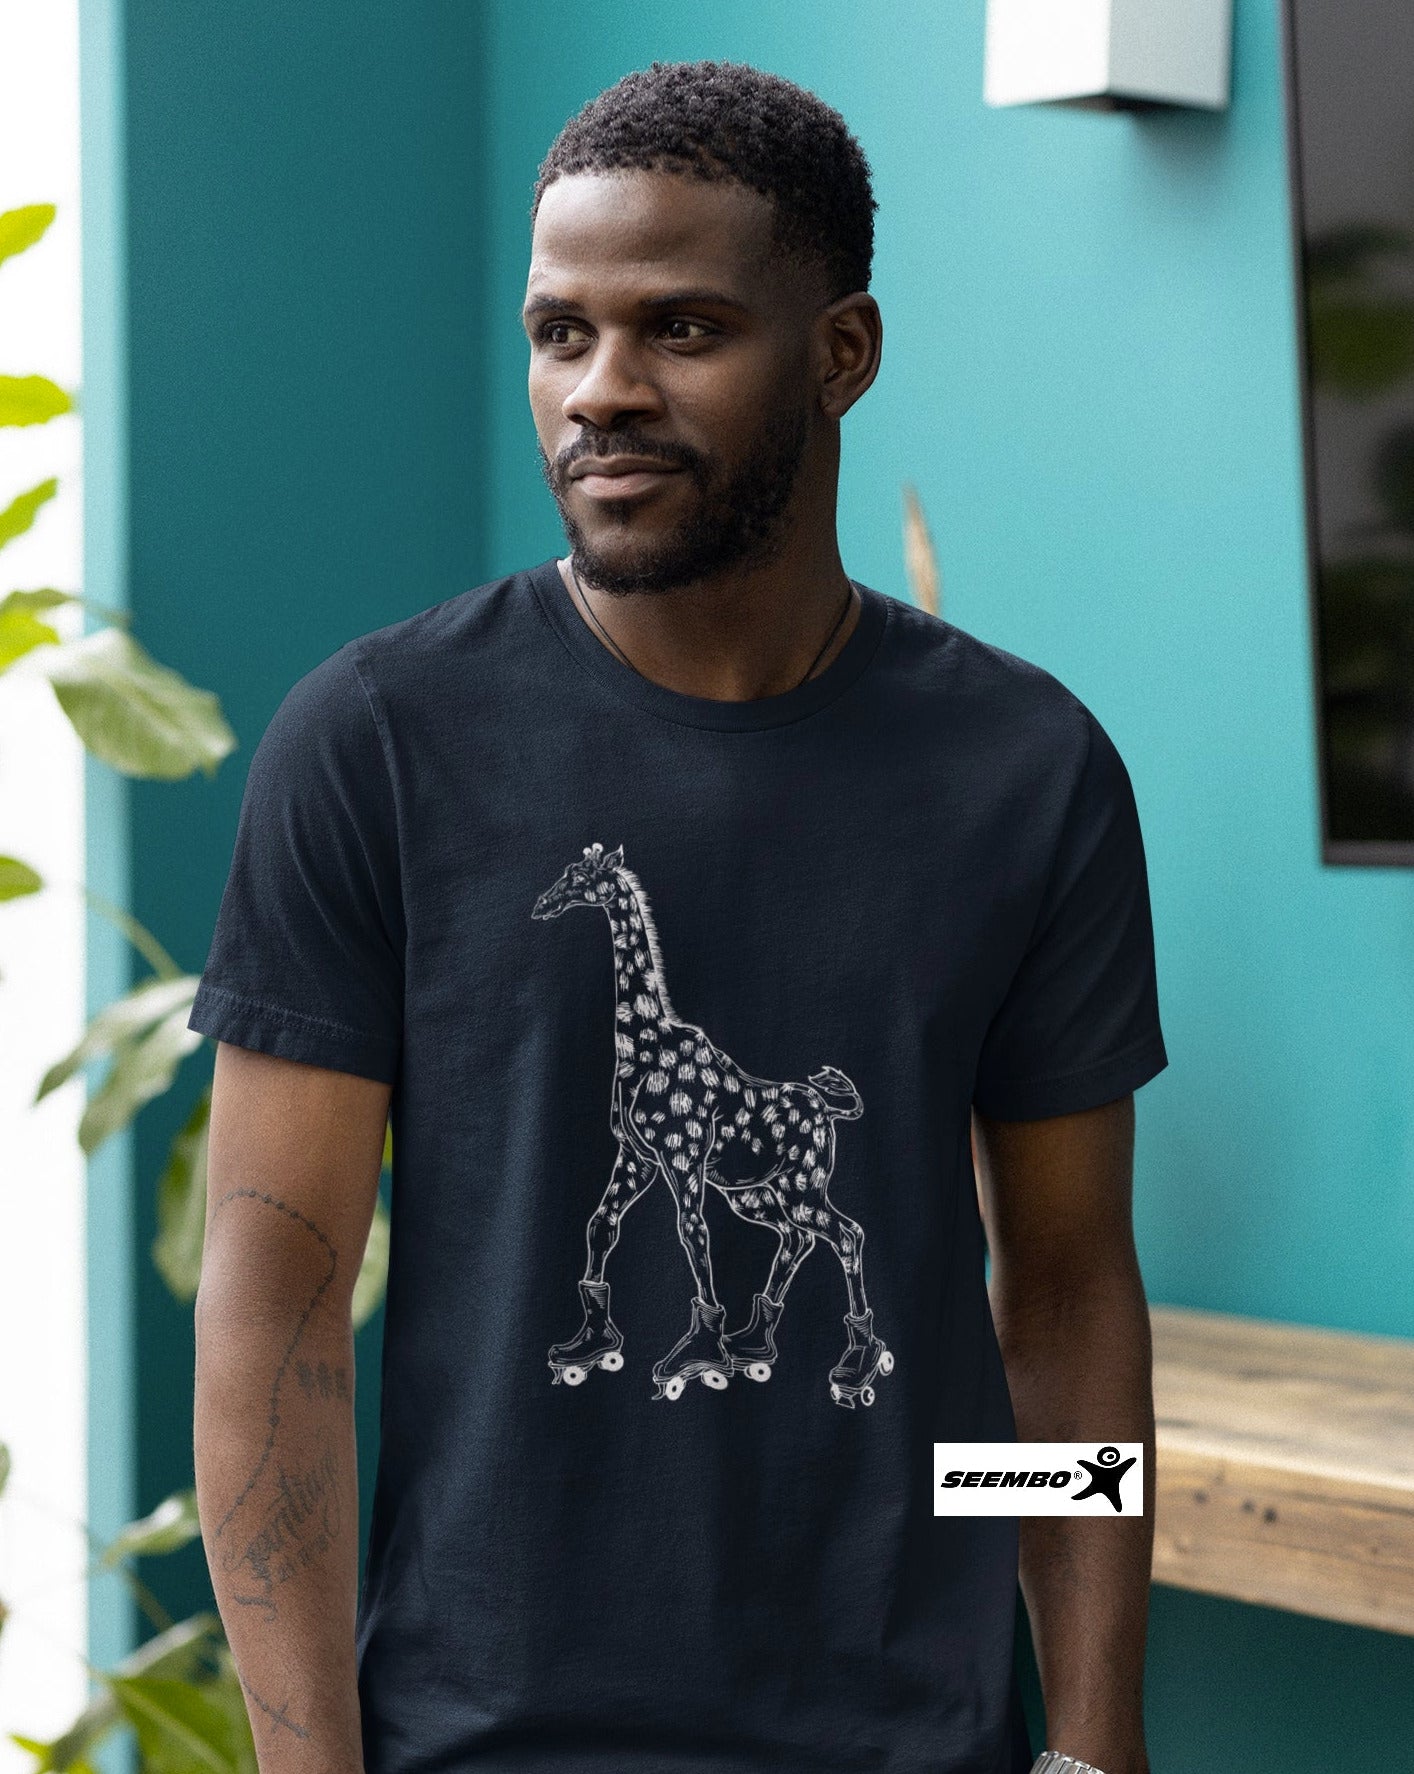 seembo-a-man-wearing-navy-t-shirt-with-giraffe-skater-roller-skating-design